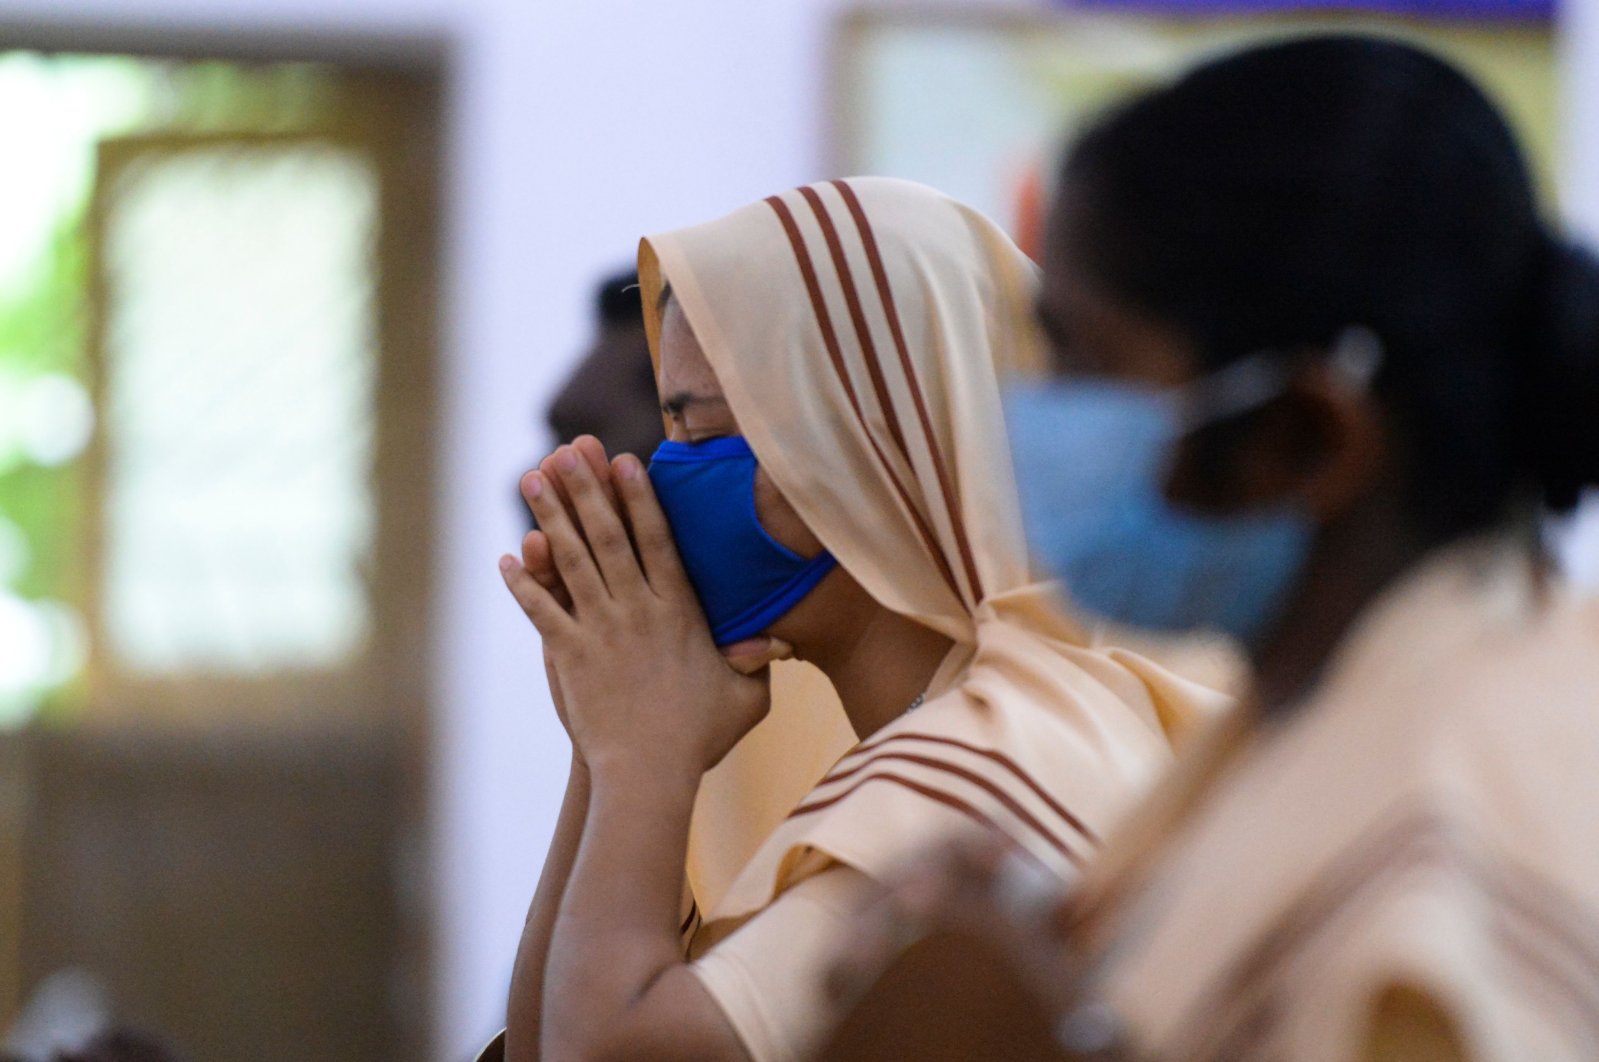 A Catholic nun wearing a face mask attends a Mass service at Saint Joseph's Church, Hyderabad, India, June 8, 2020. (AFP Photo)